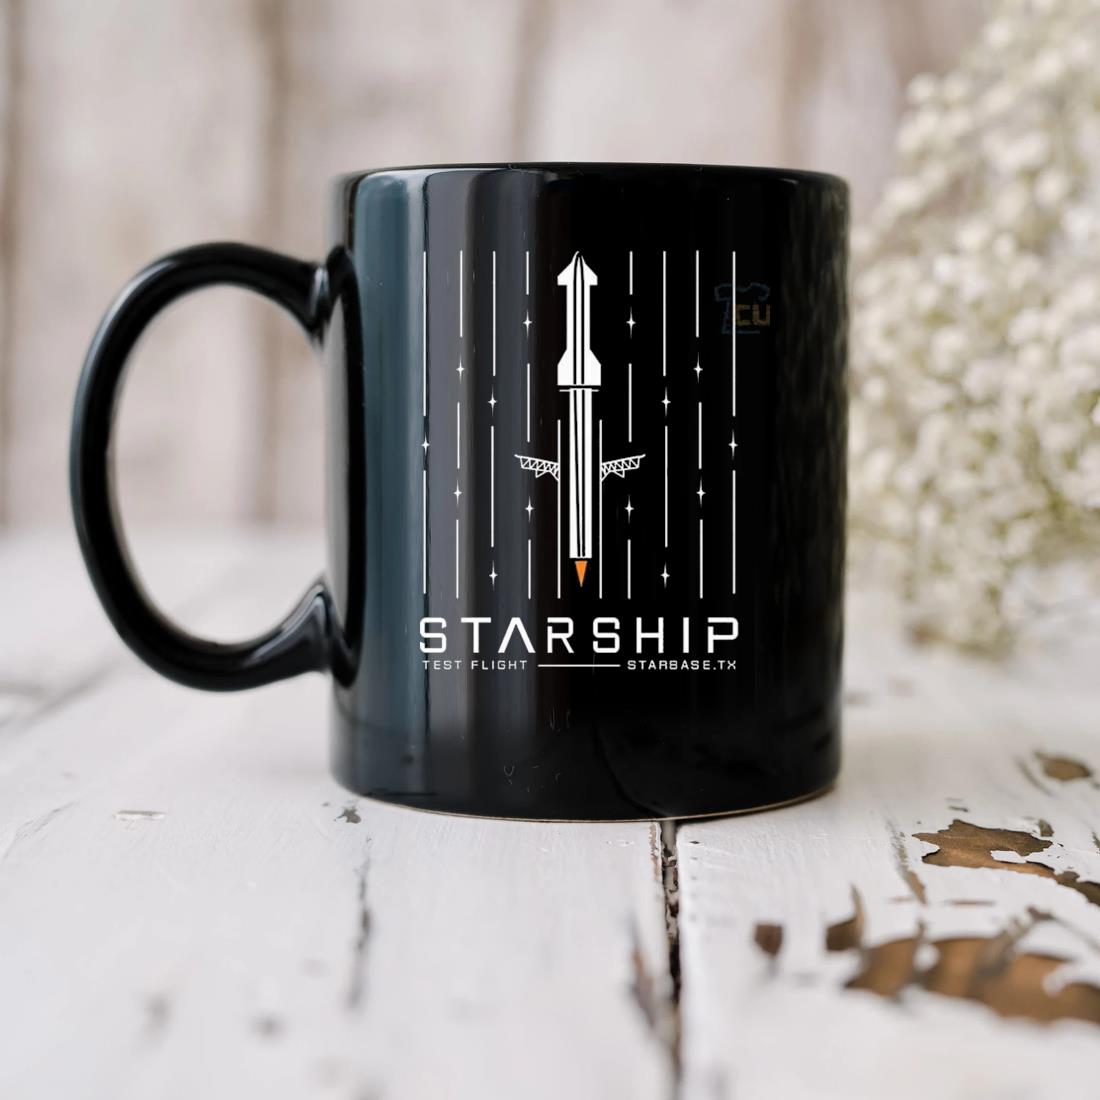 Spacex Starship Test Flight Mug biu